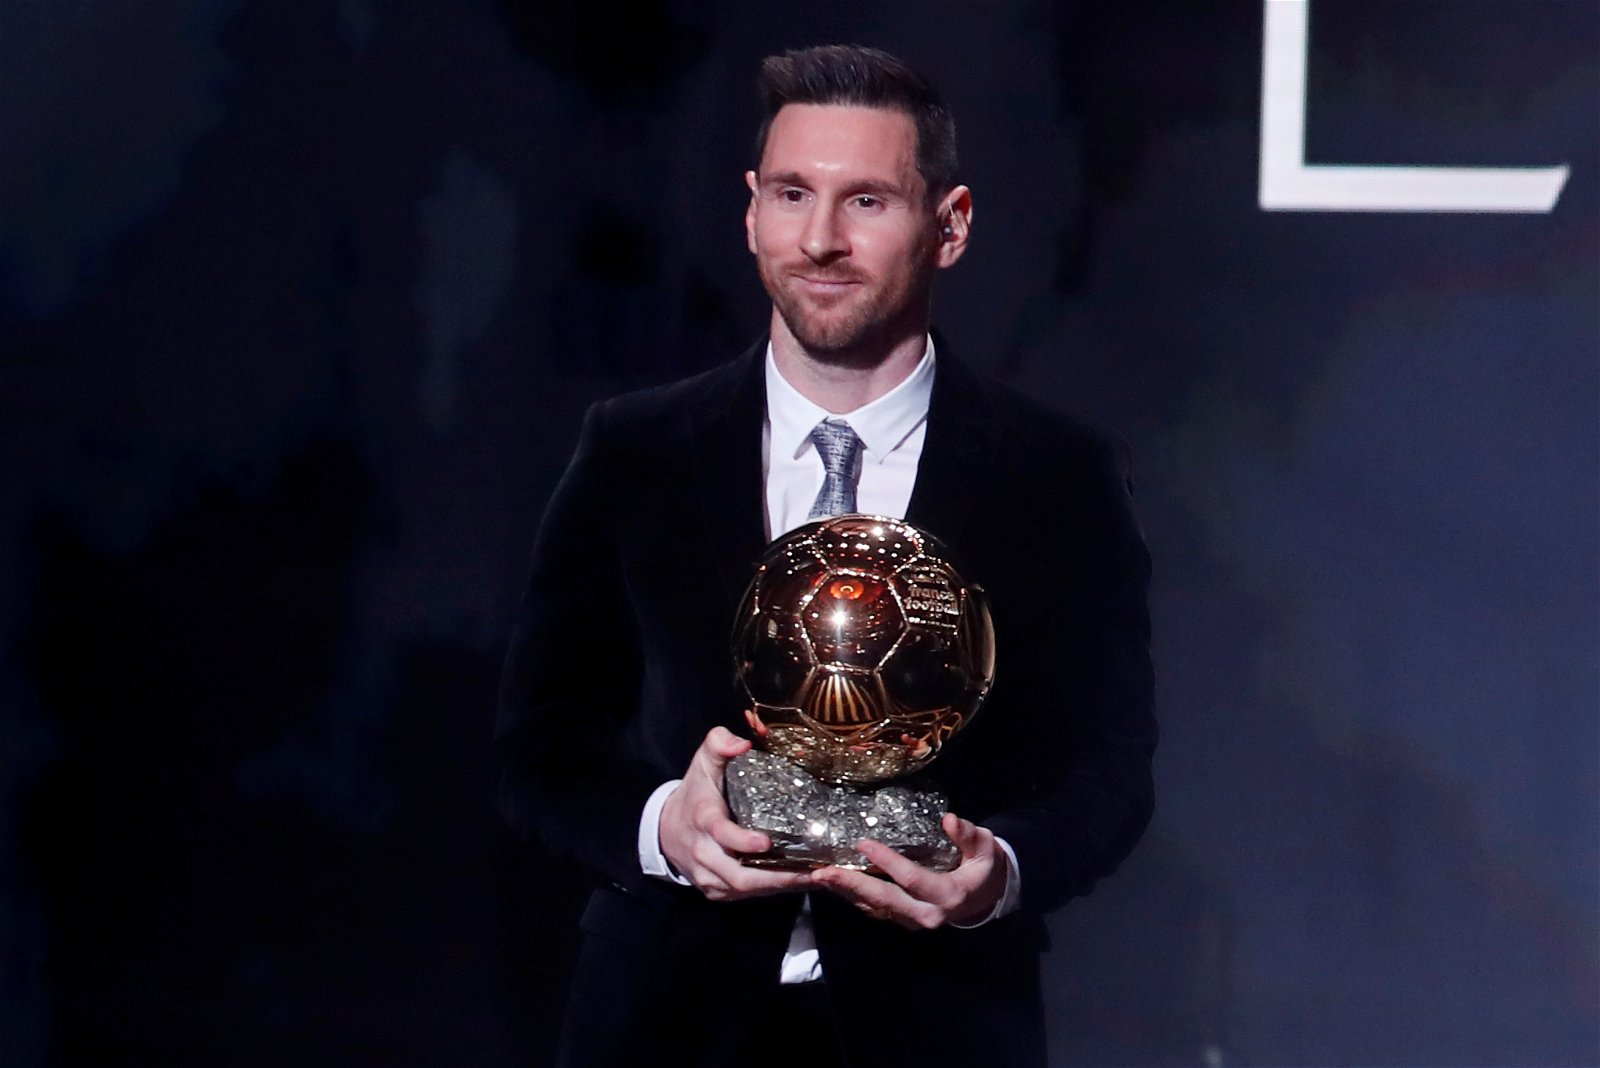 Ballon d'Or Award Winner 2019 & 2021 - Lionel Messi Wins 2019 & 2021 Ballon d'Or Award